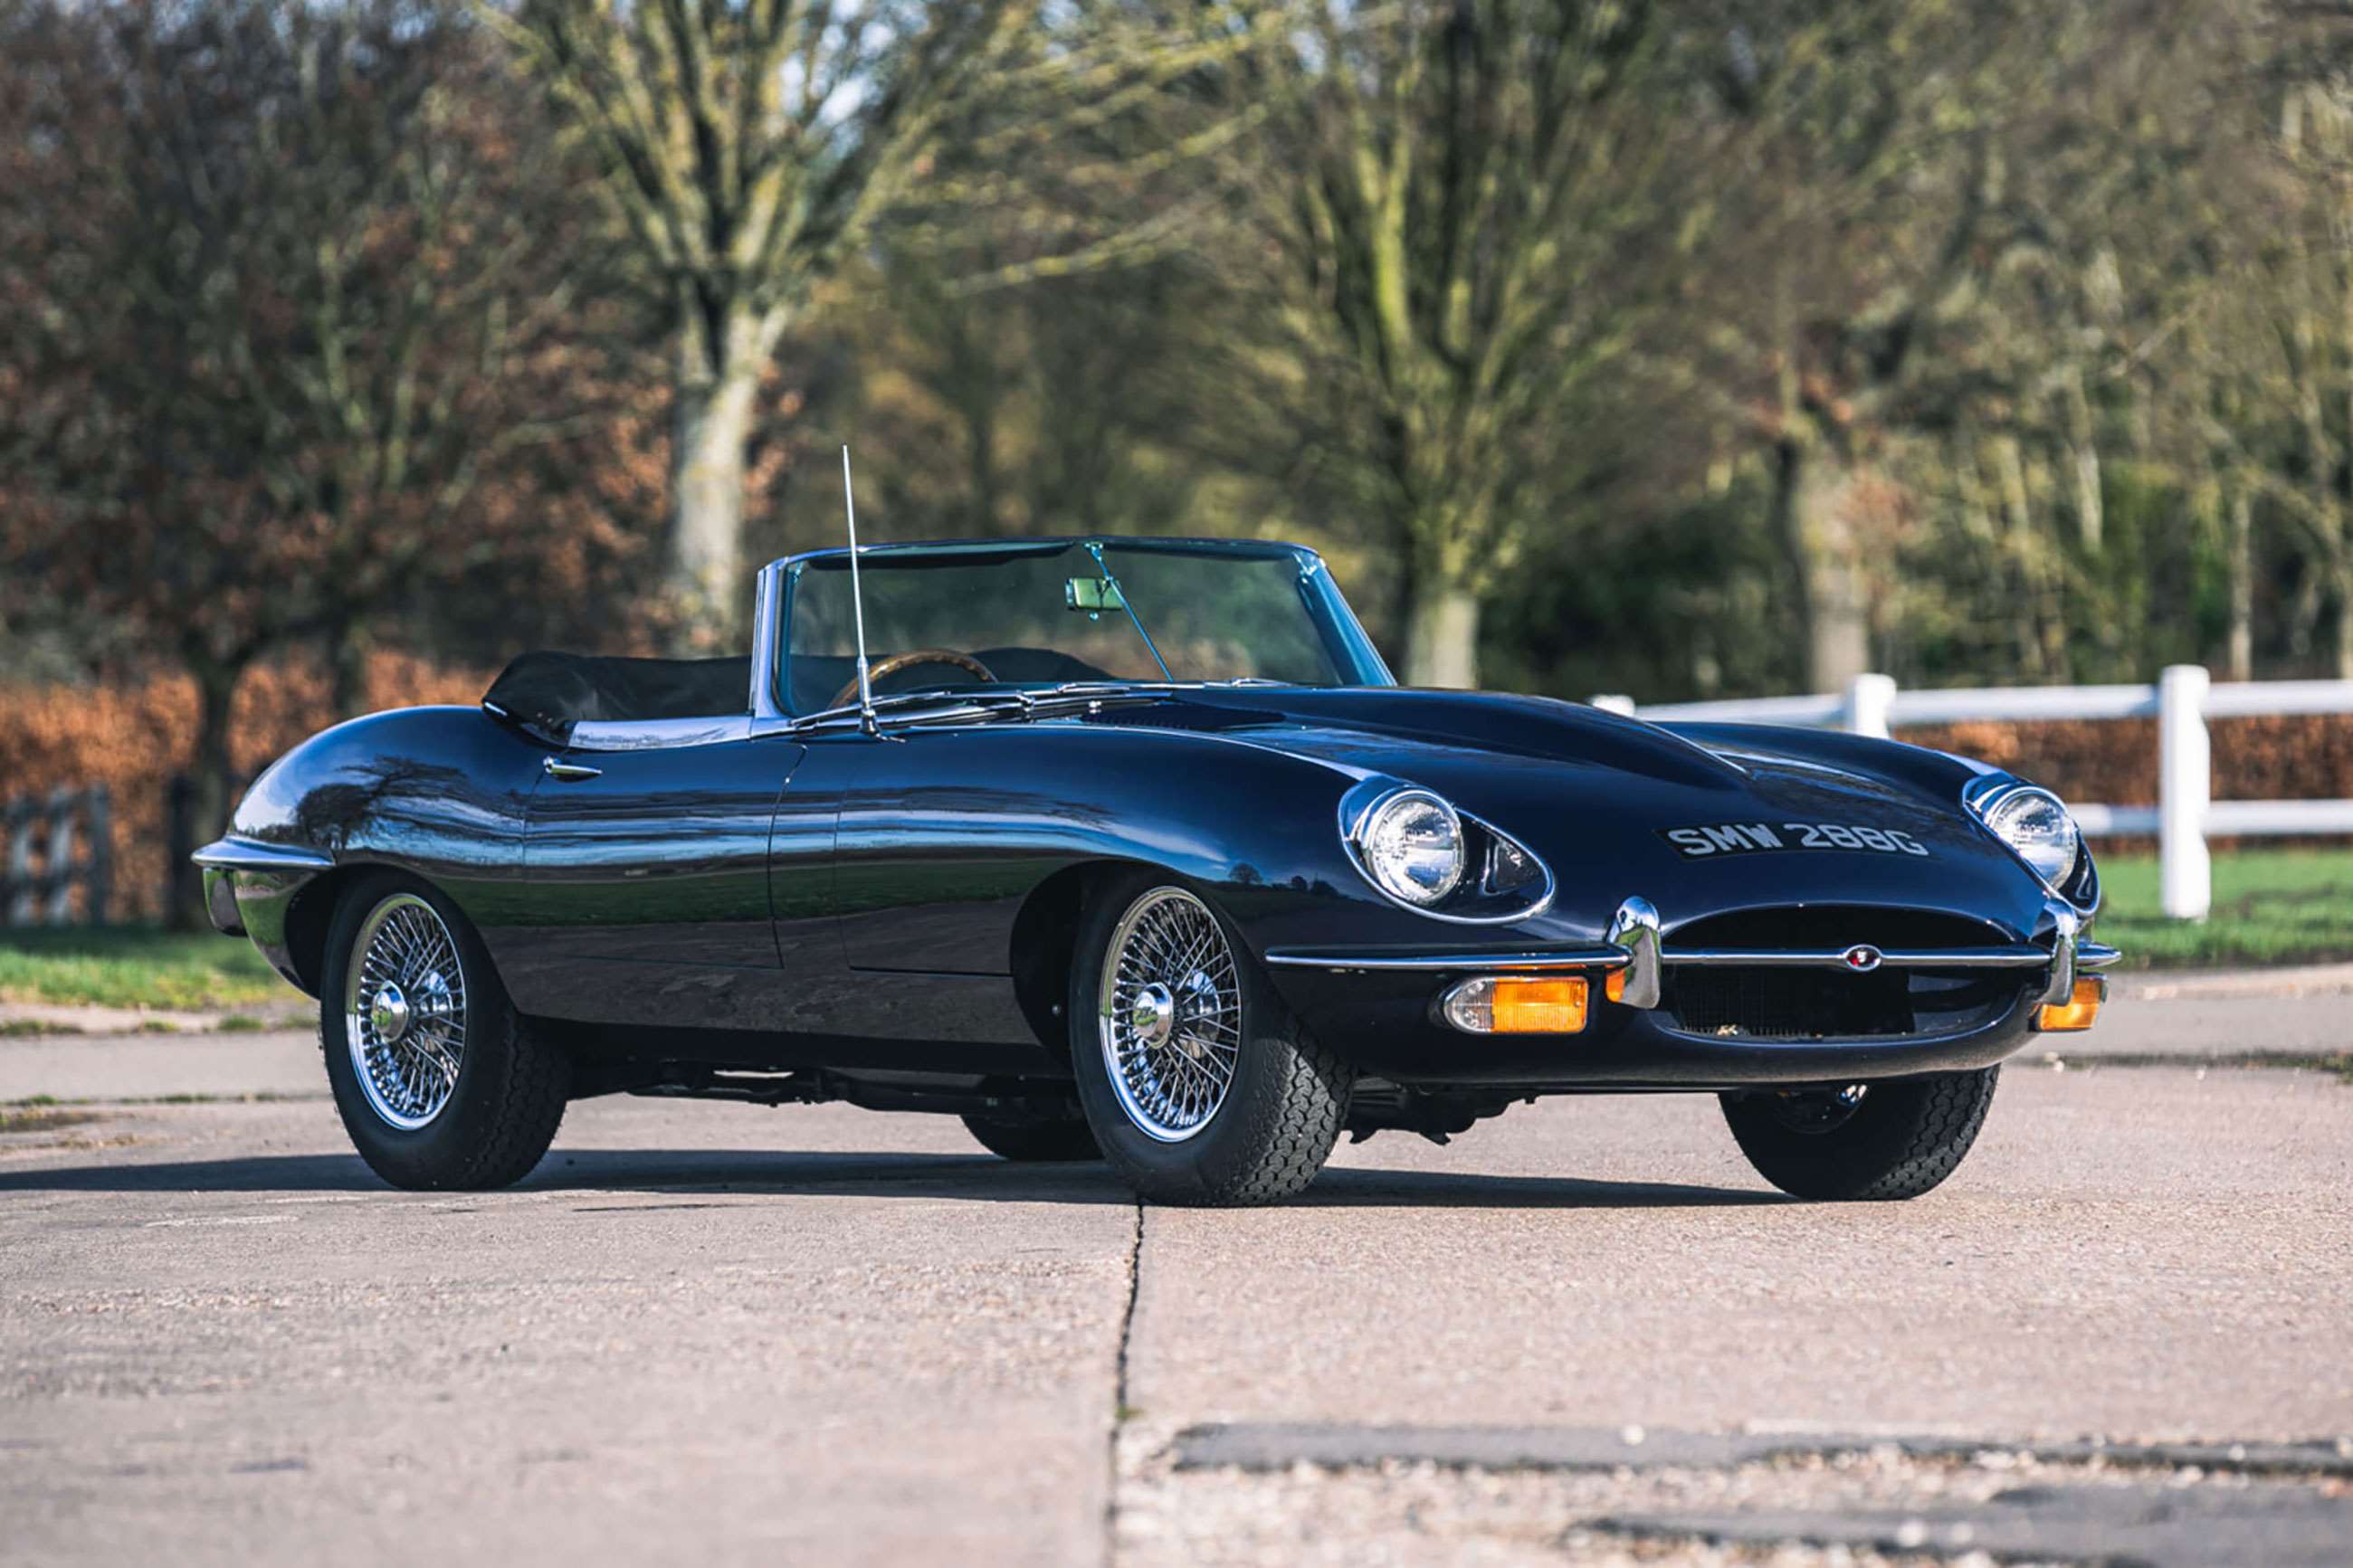 jaguar-e-type-roadster-smw-288g-silverstone-auctions-goodwood-23032021.jpg